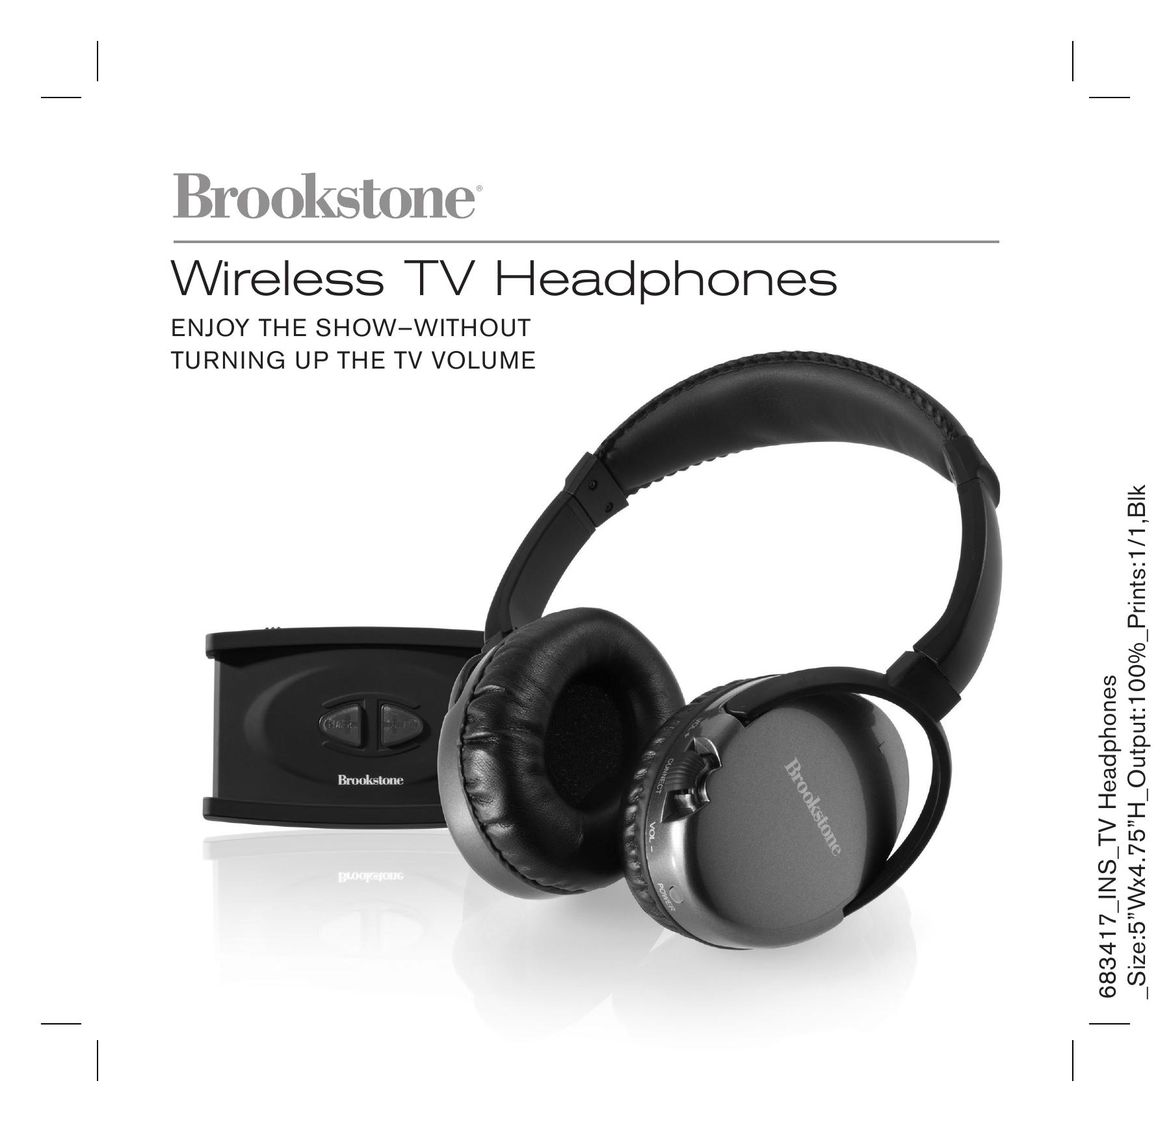 Brookstone 683417 Headphones User Manual